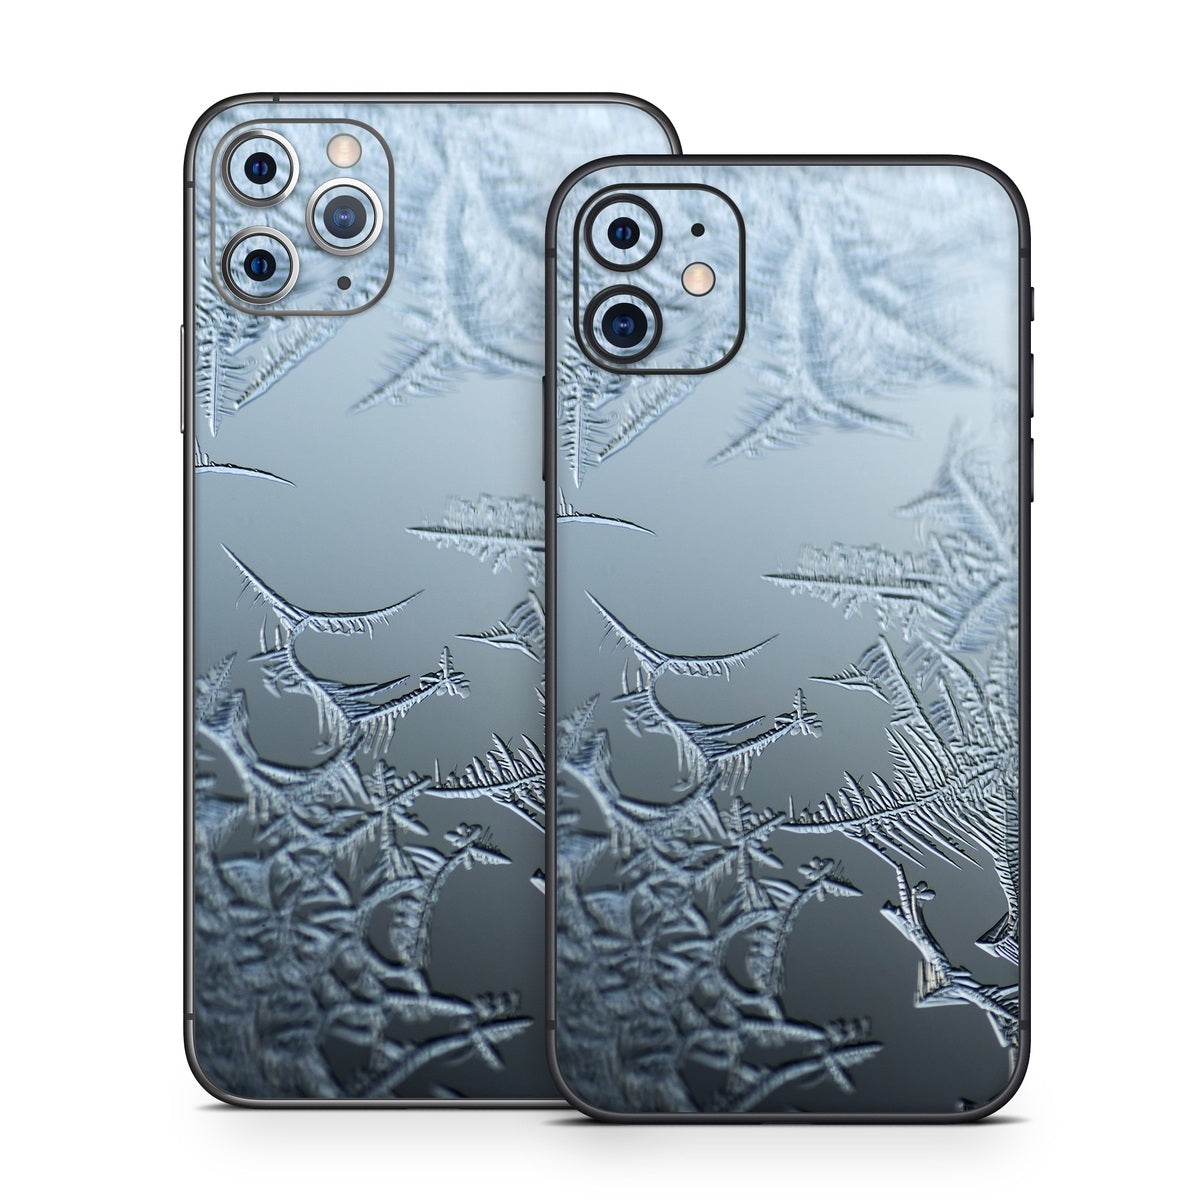 Icy - Apple iPhone 11 Skin